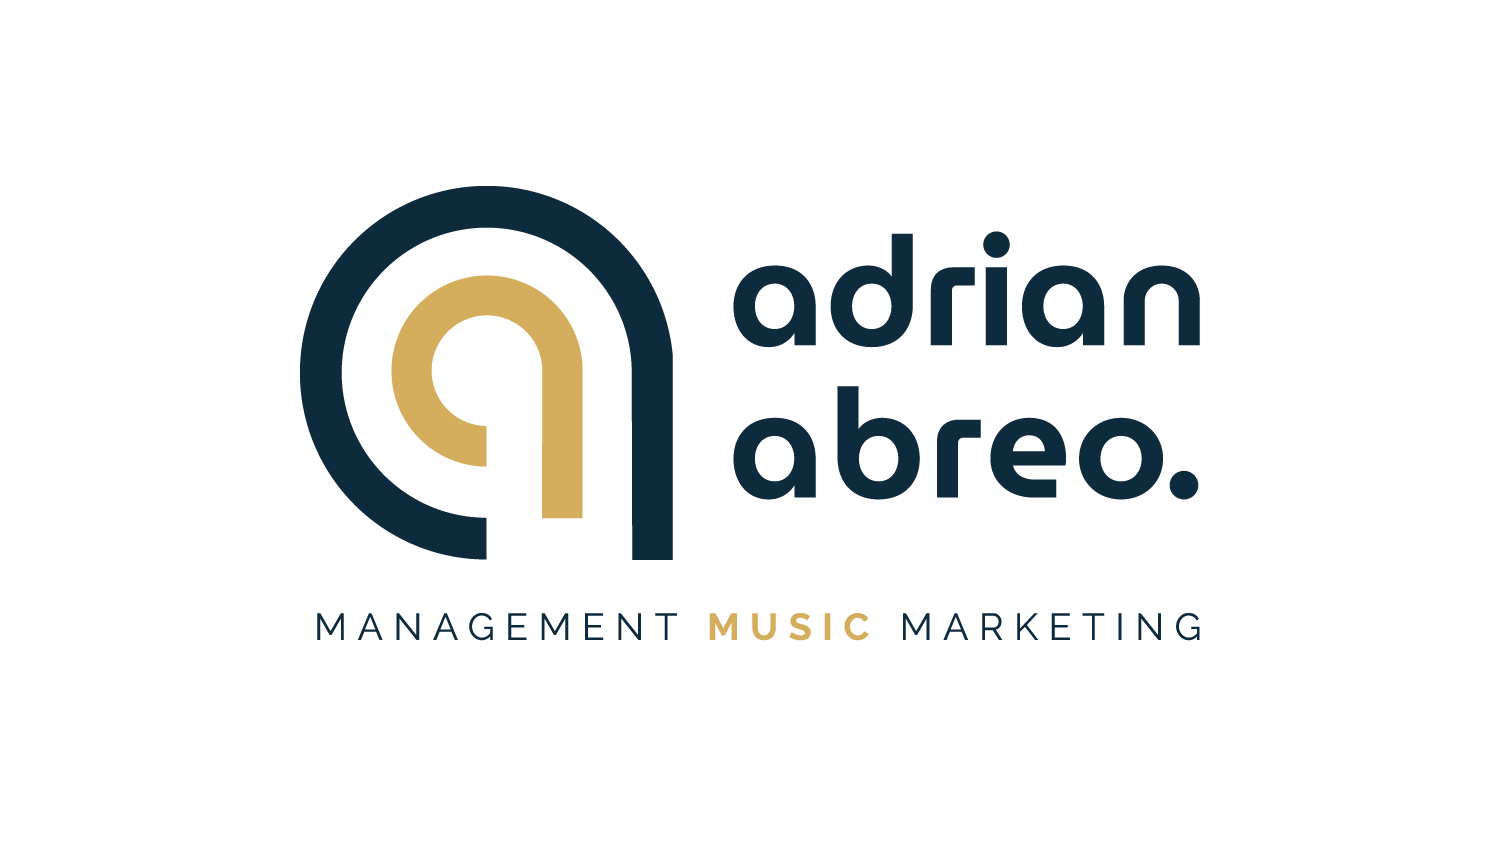 Adrian Abreo